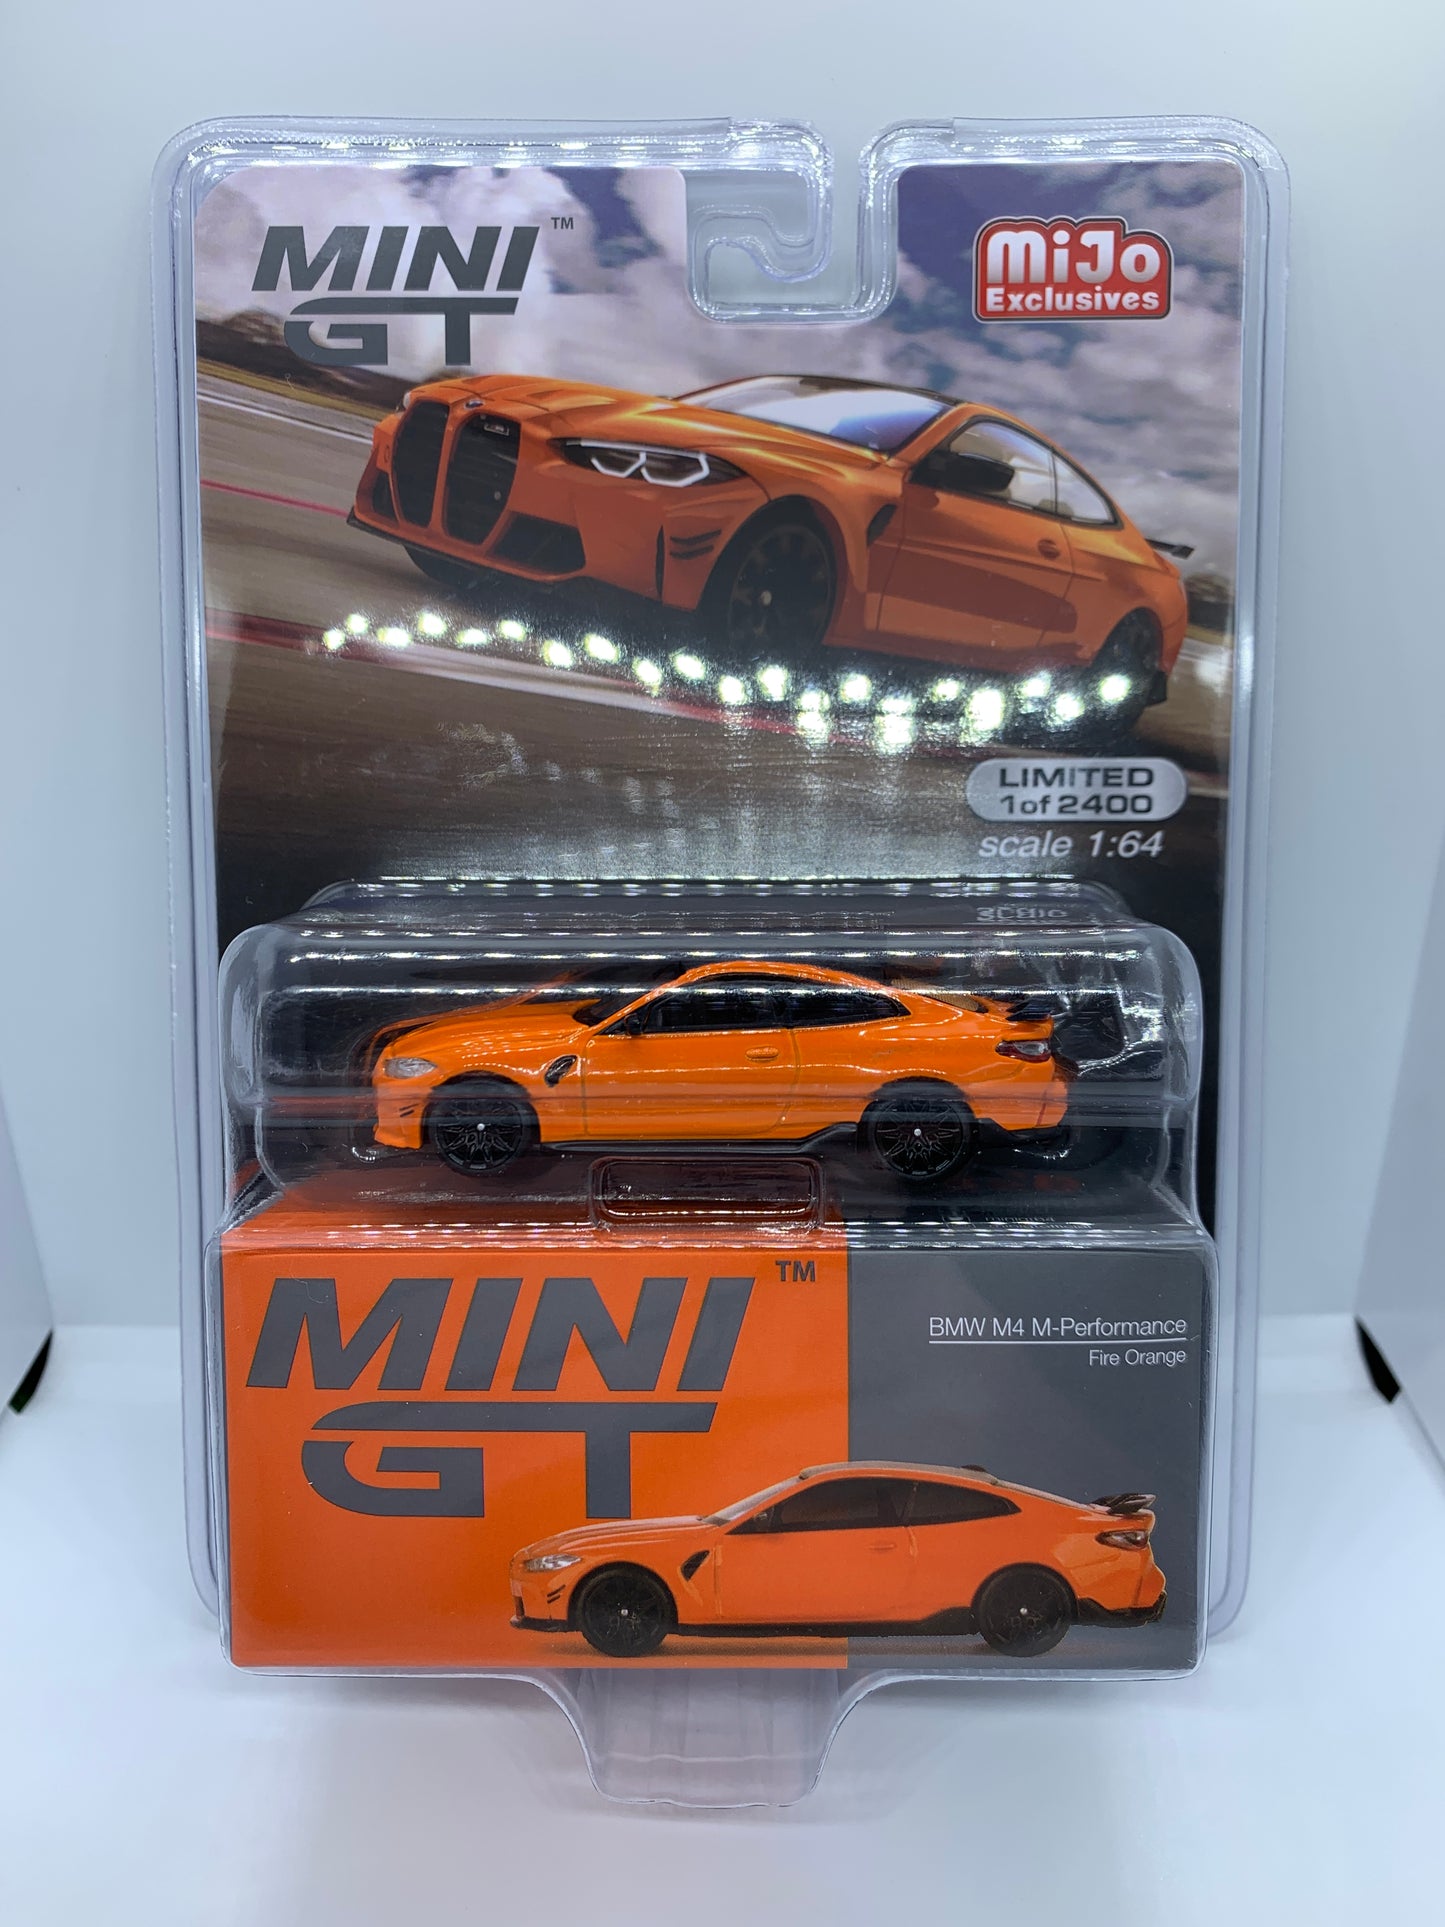 MINI GT - BMW M4 M-Performance Fire Orange - Display Blister Packaging